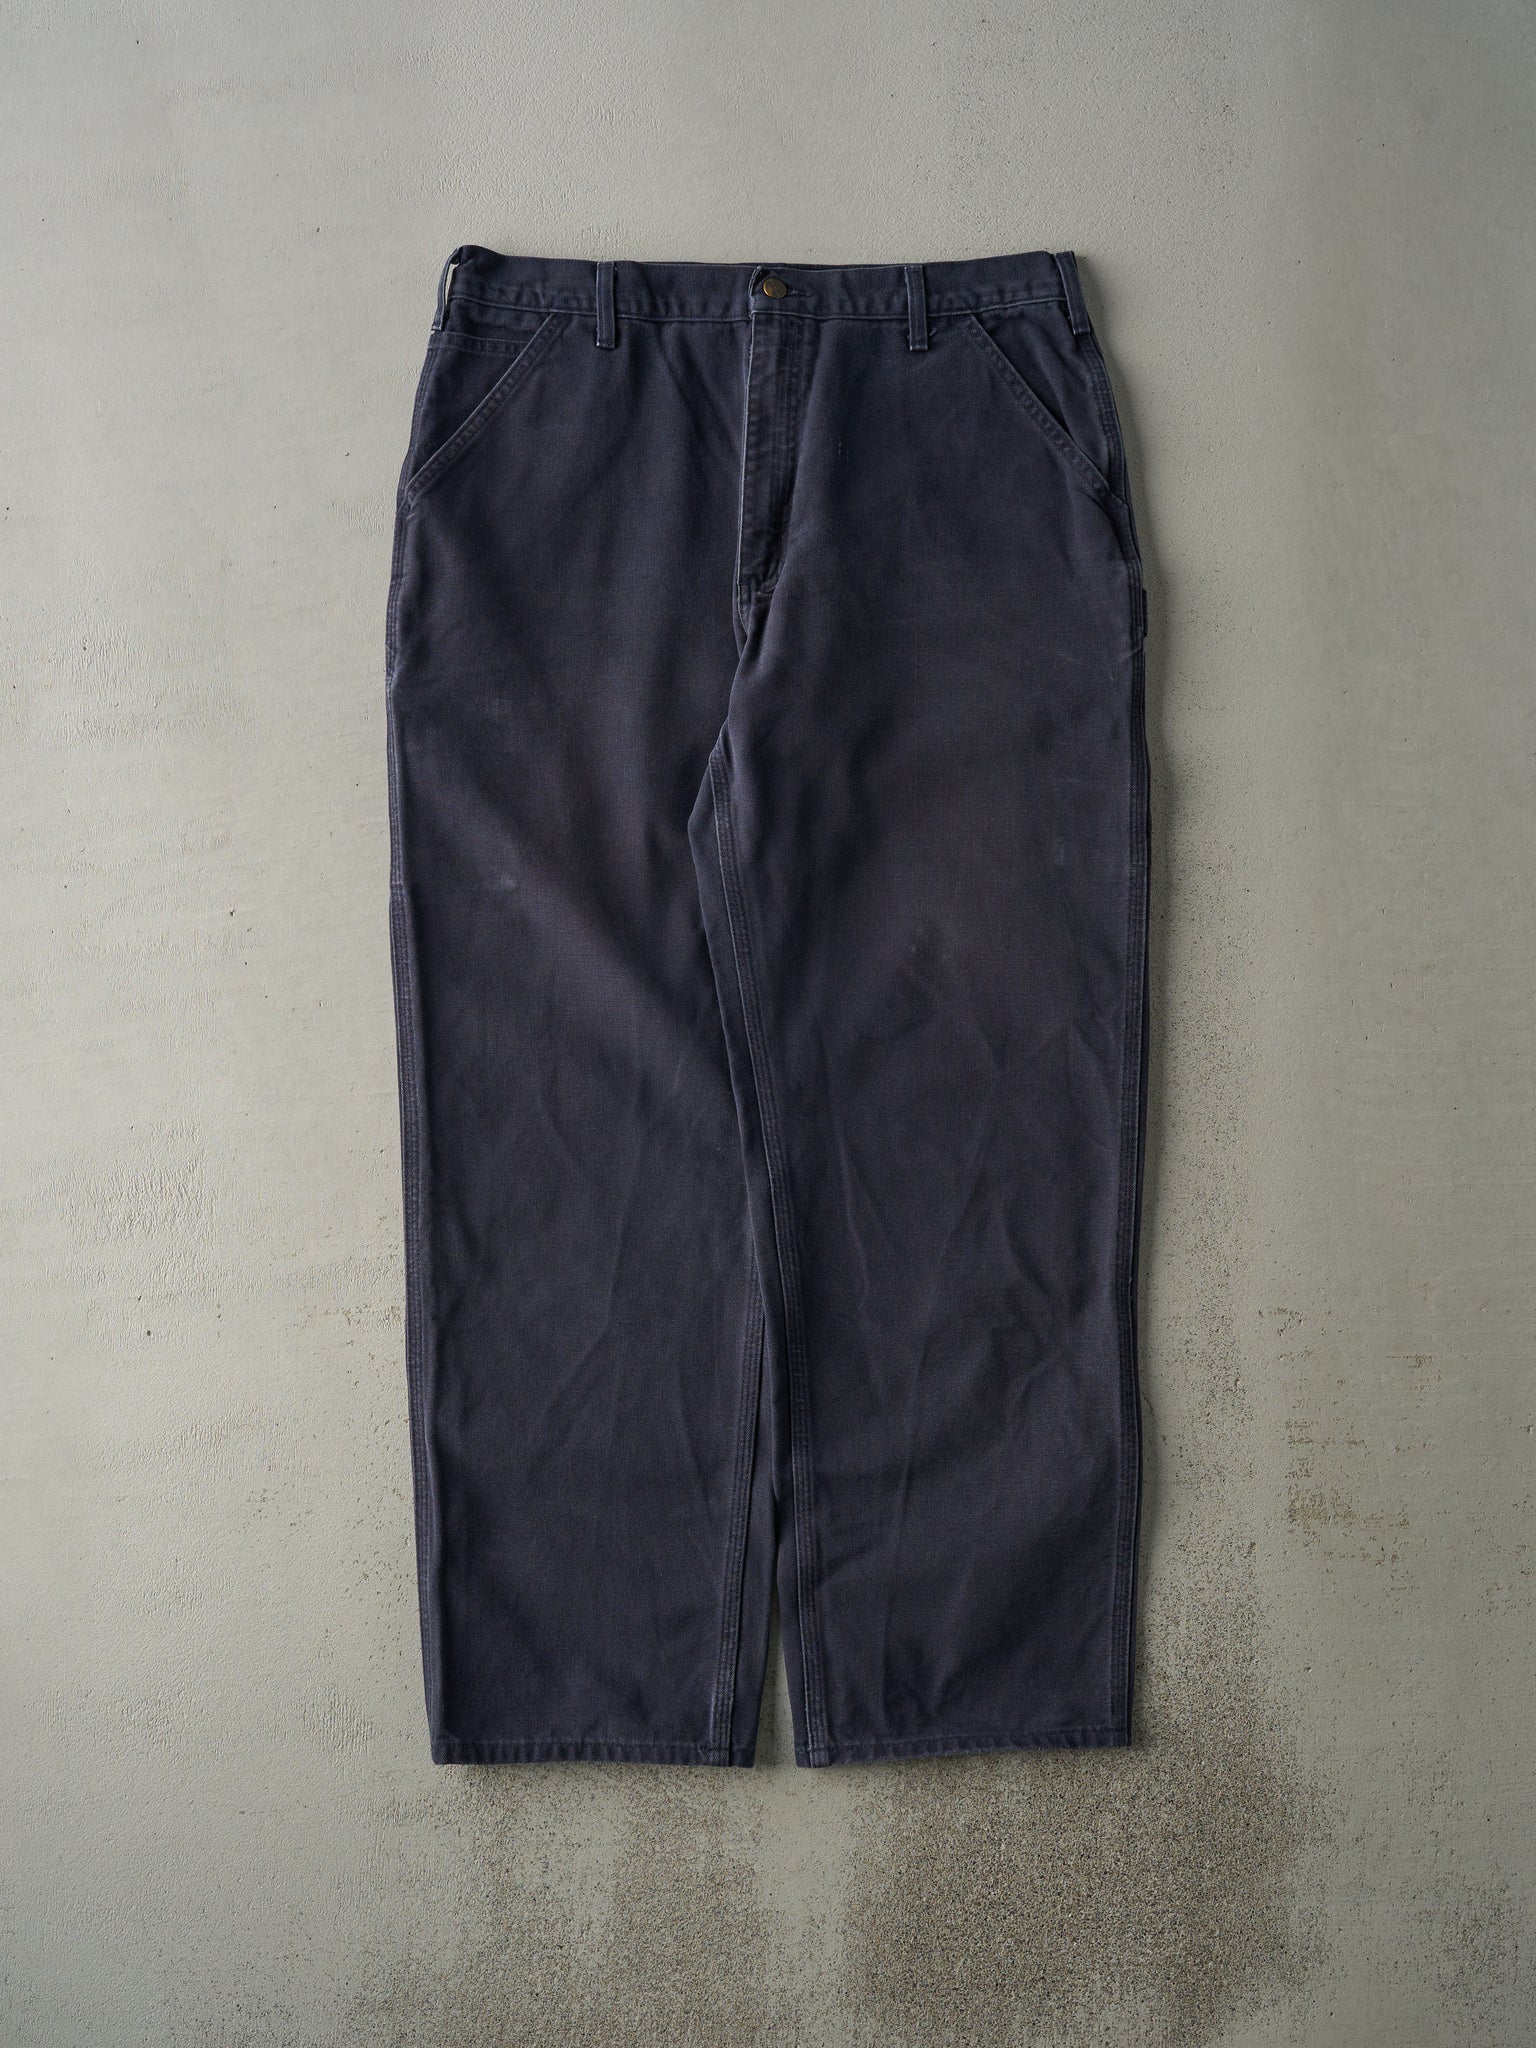 Vintage 90s Navy Blue Carhartt Dungaree Fit Carpenter Pants (36x31.5)